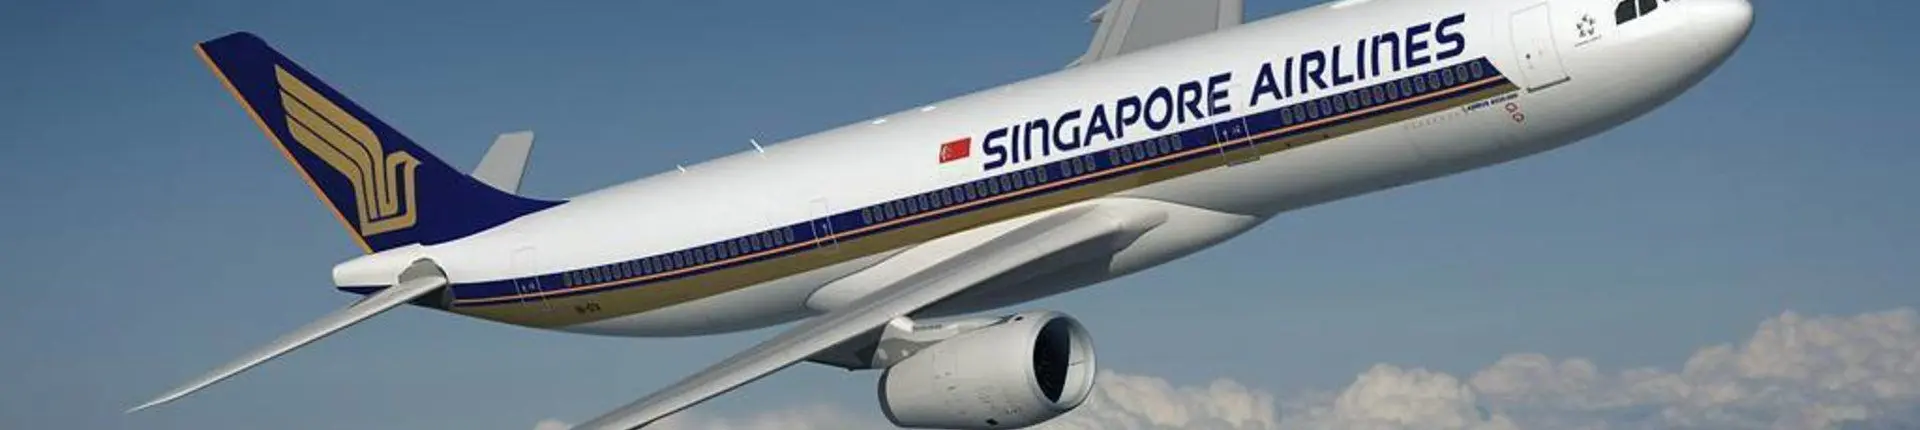 https://cdn2.enuygun.com/media/lib/1920x430/uploads/image/singapore-airlines-13696.webp